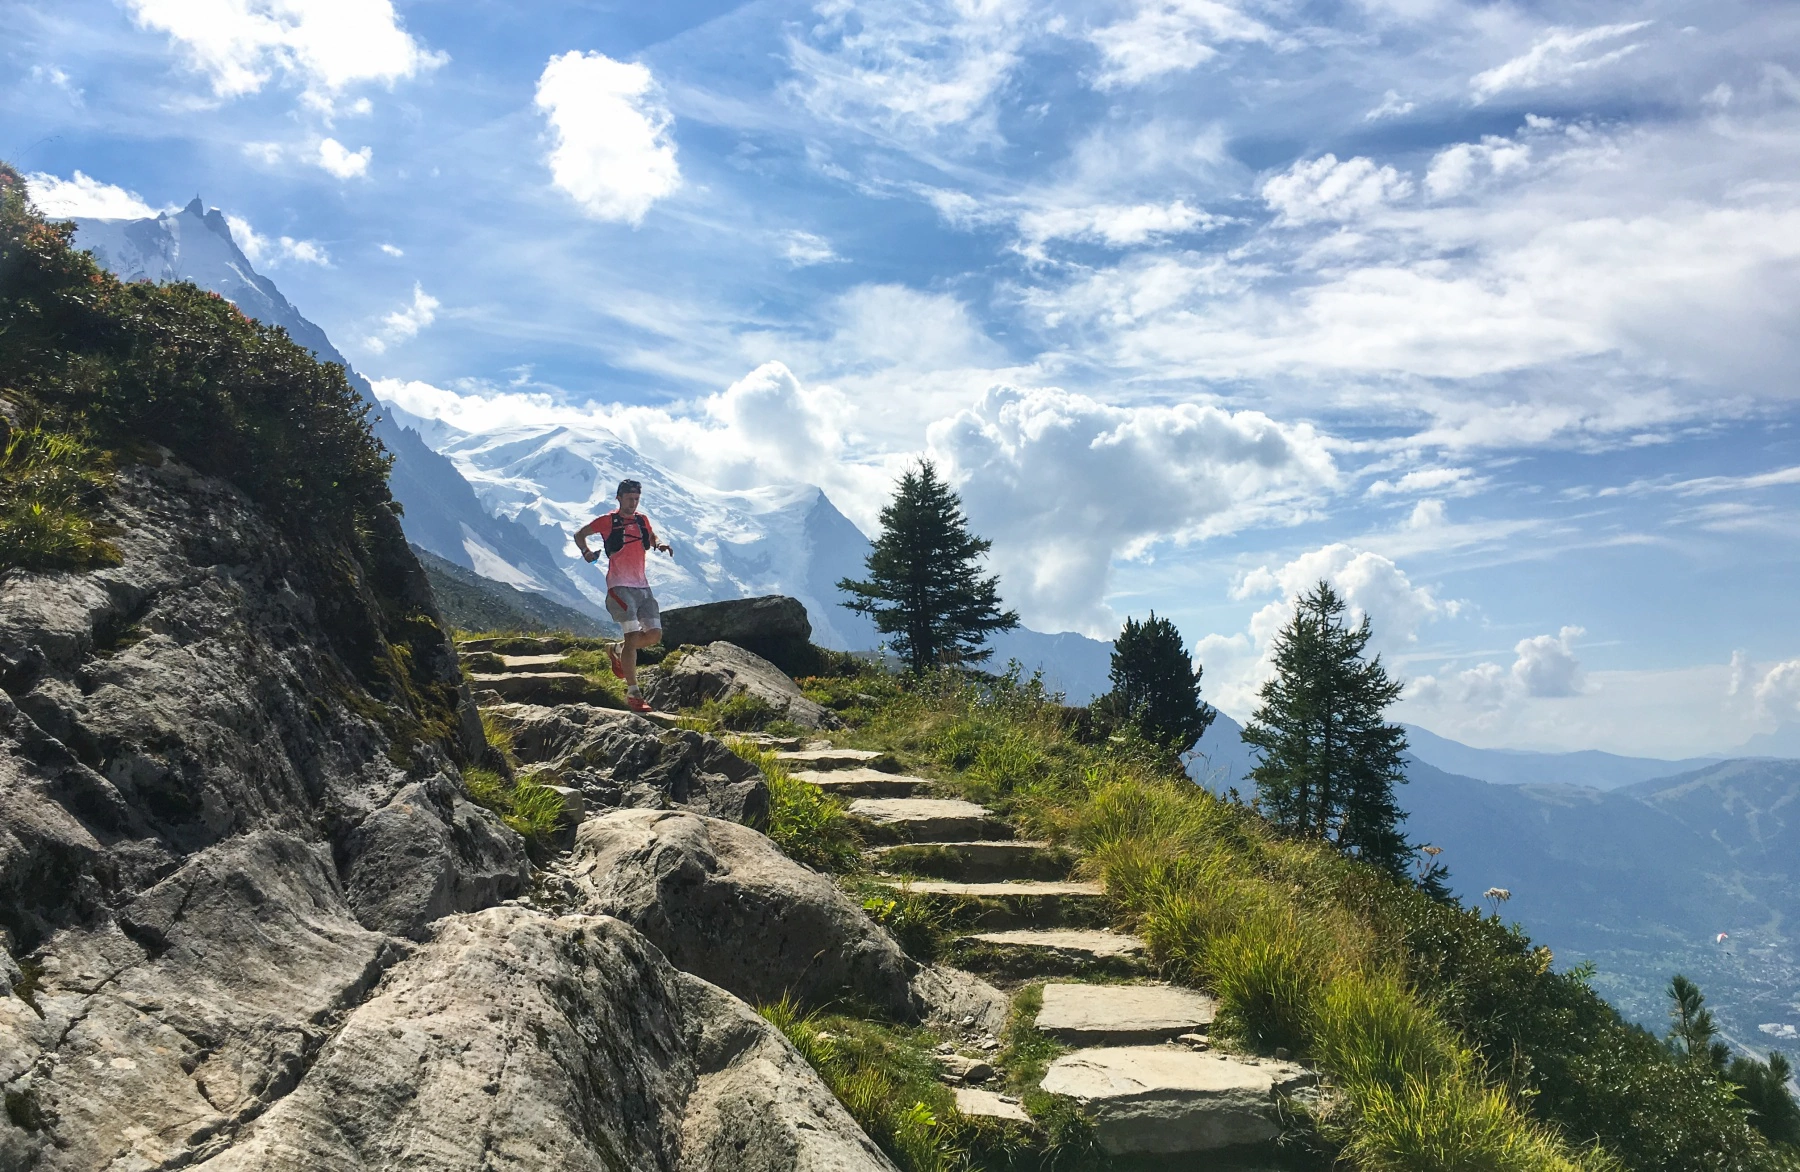 Trail running in Chamonix - alternatives to UTMB